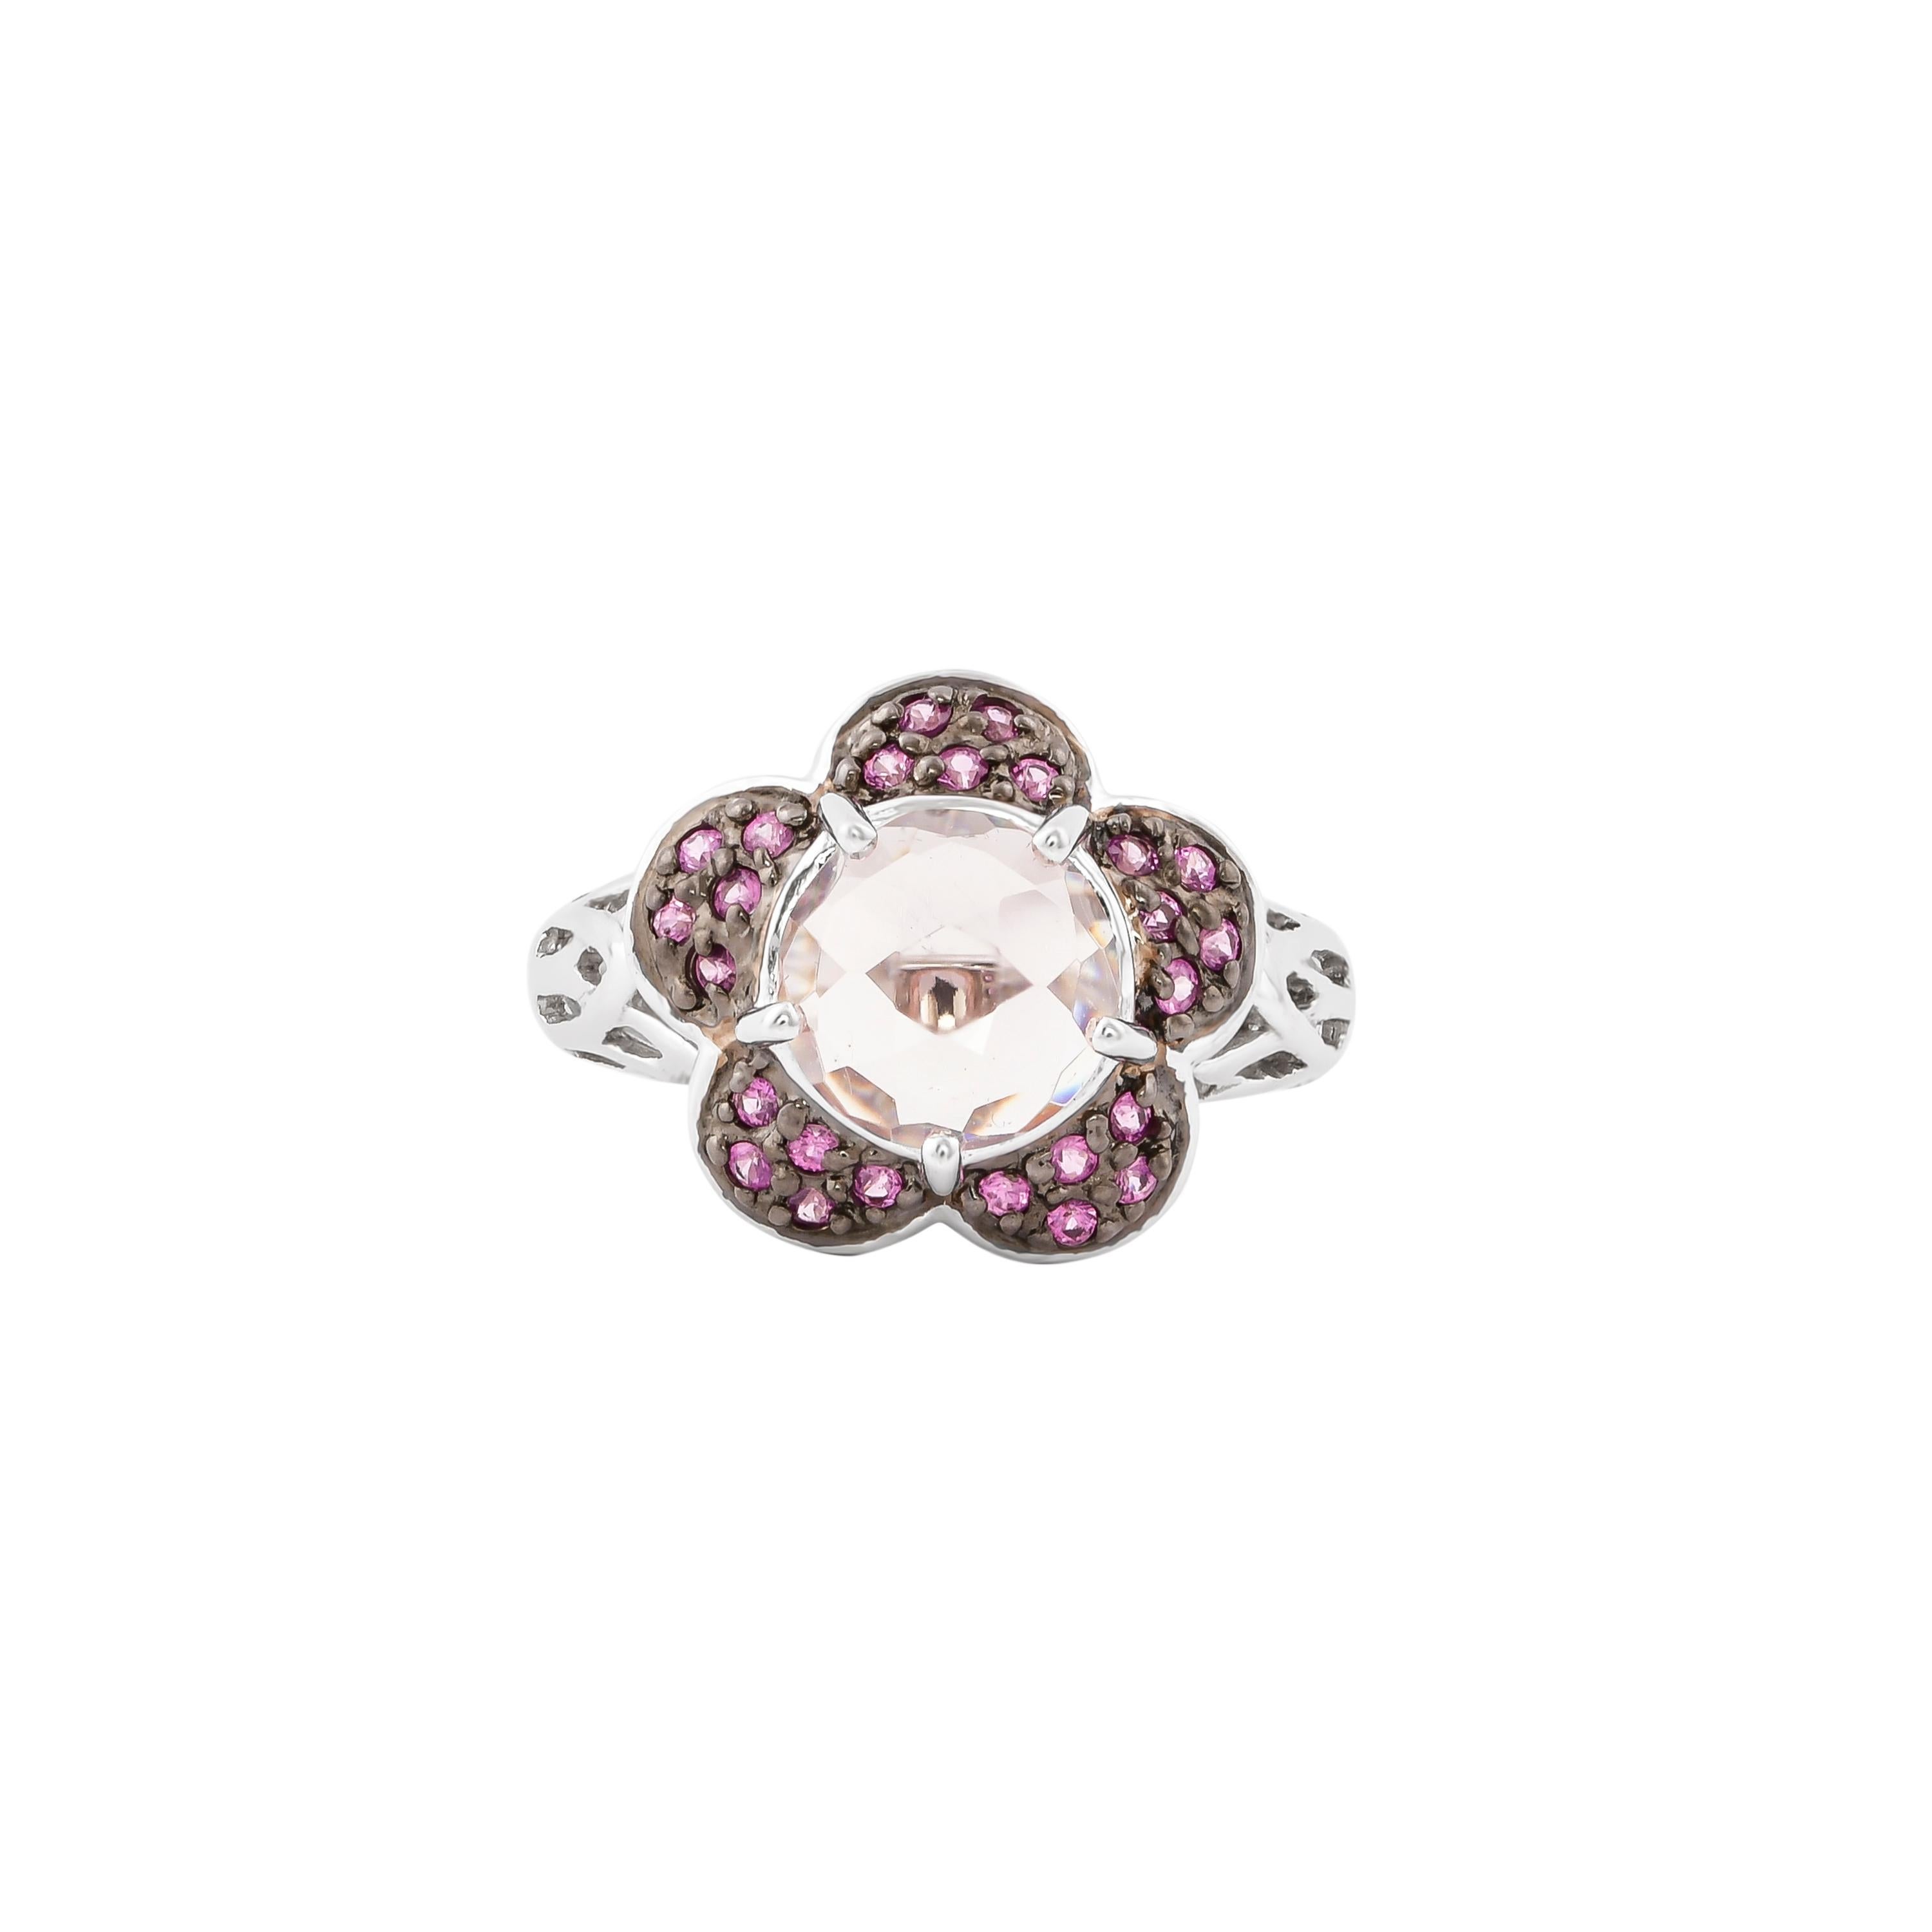 3 carat pink sapphire ring